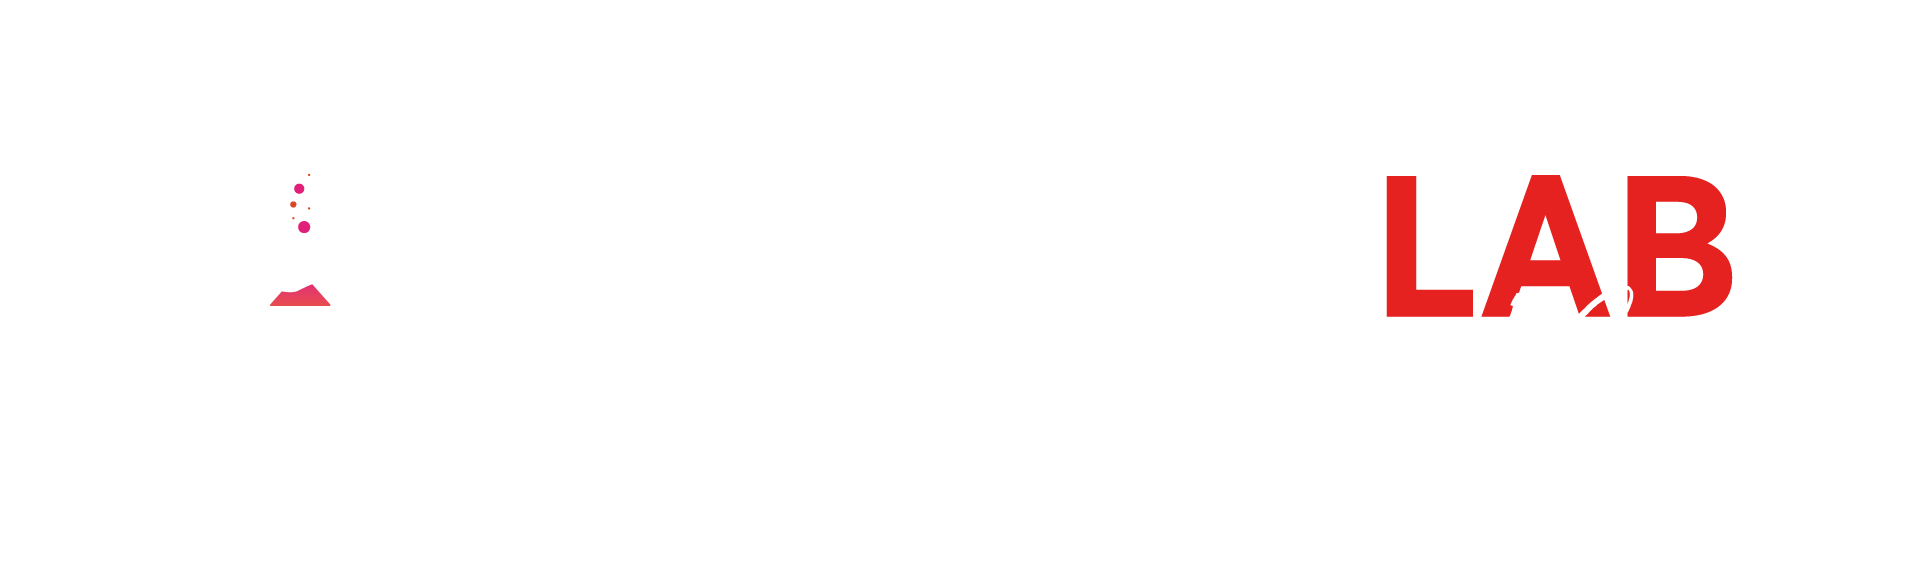 Marketing Lab logo